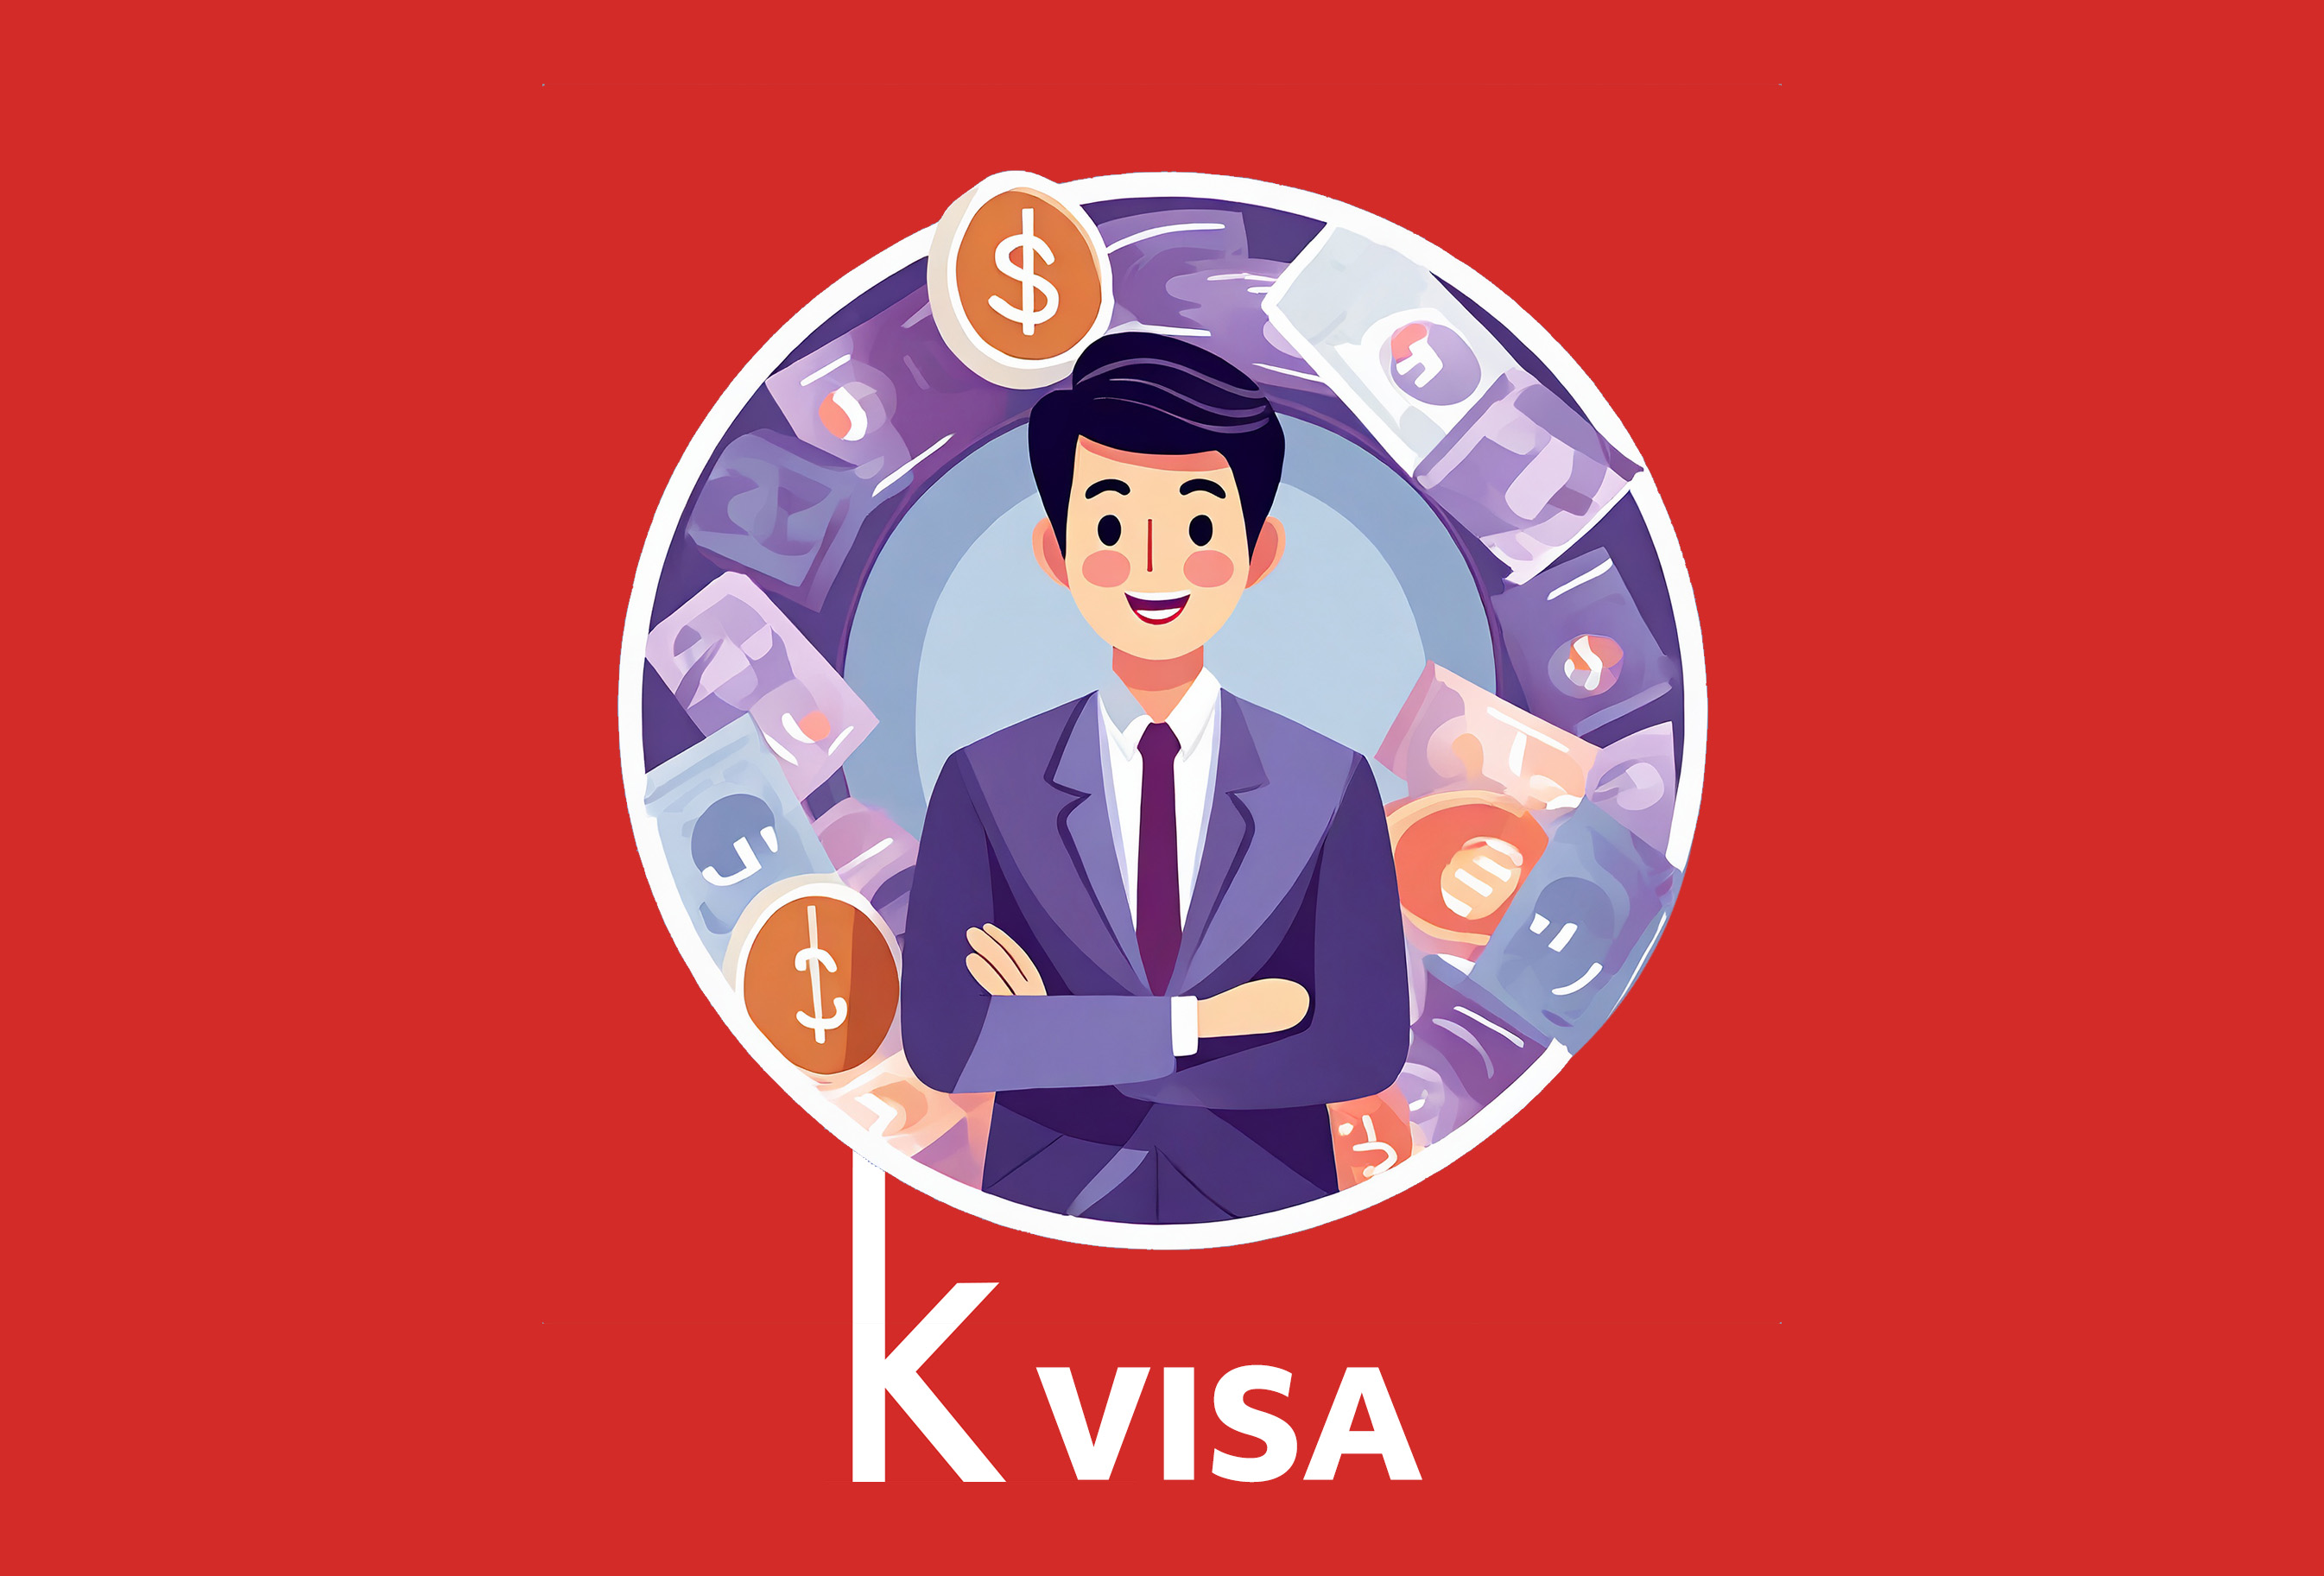 E8 Visa profile.jpg